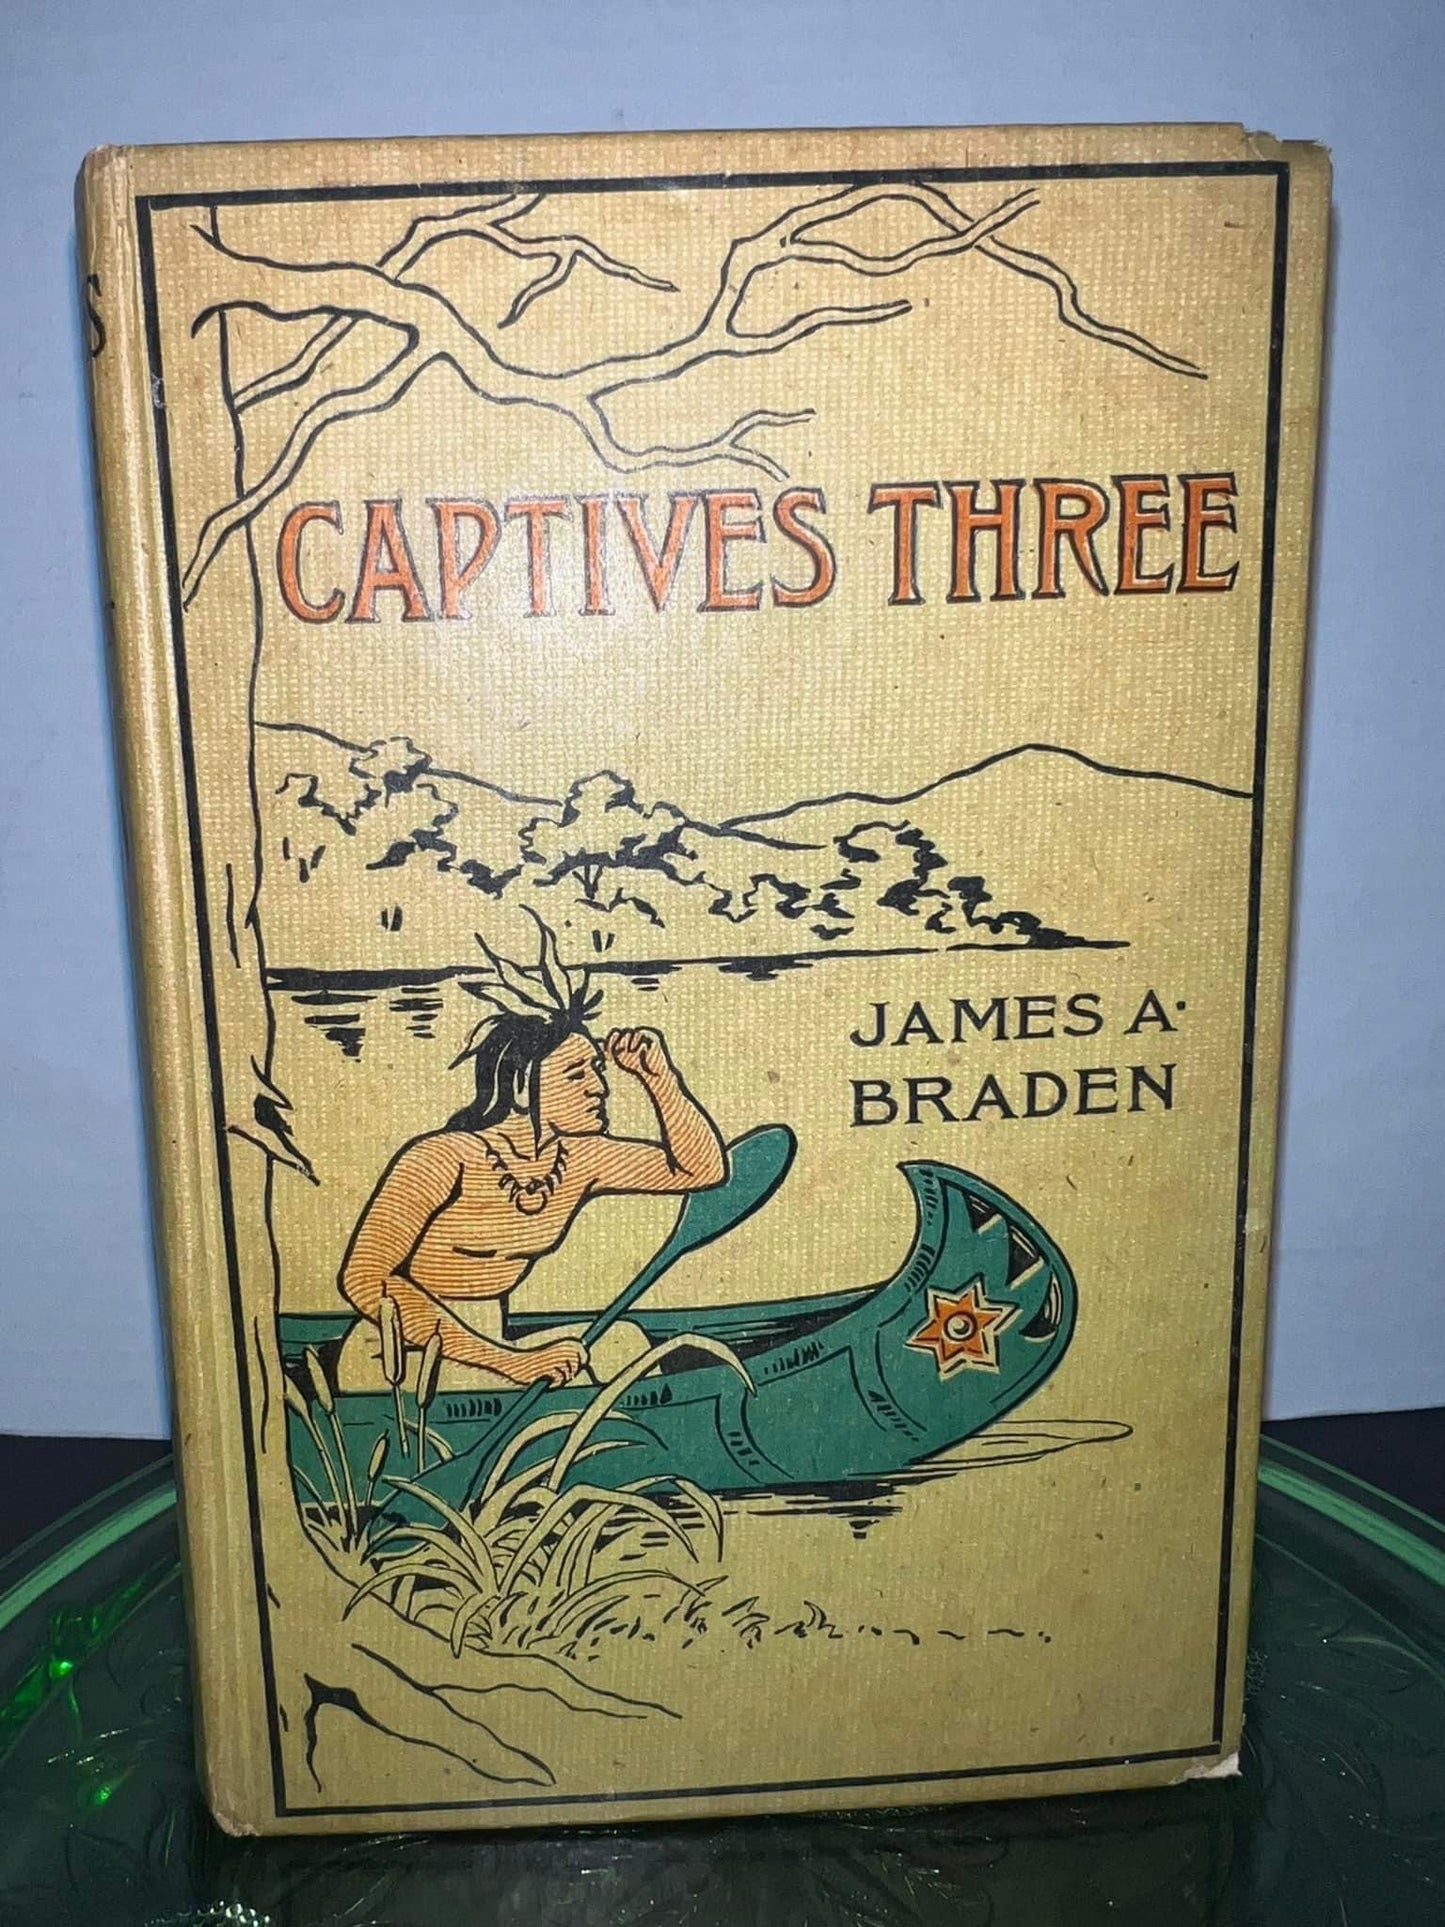 Vintage 1904

Captives three

James a Braden